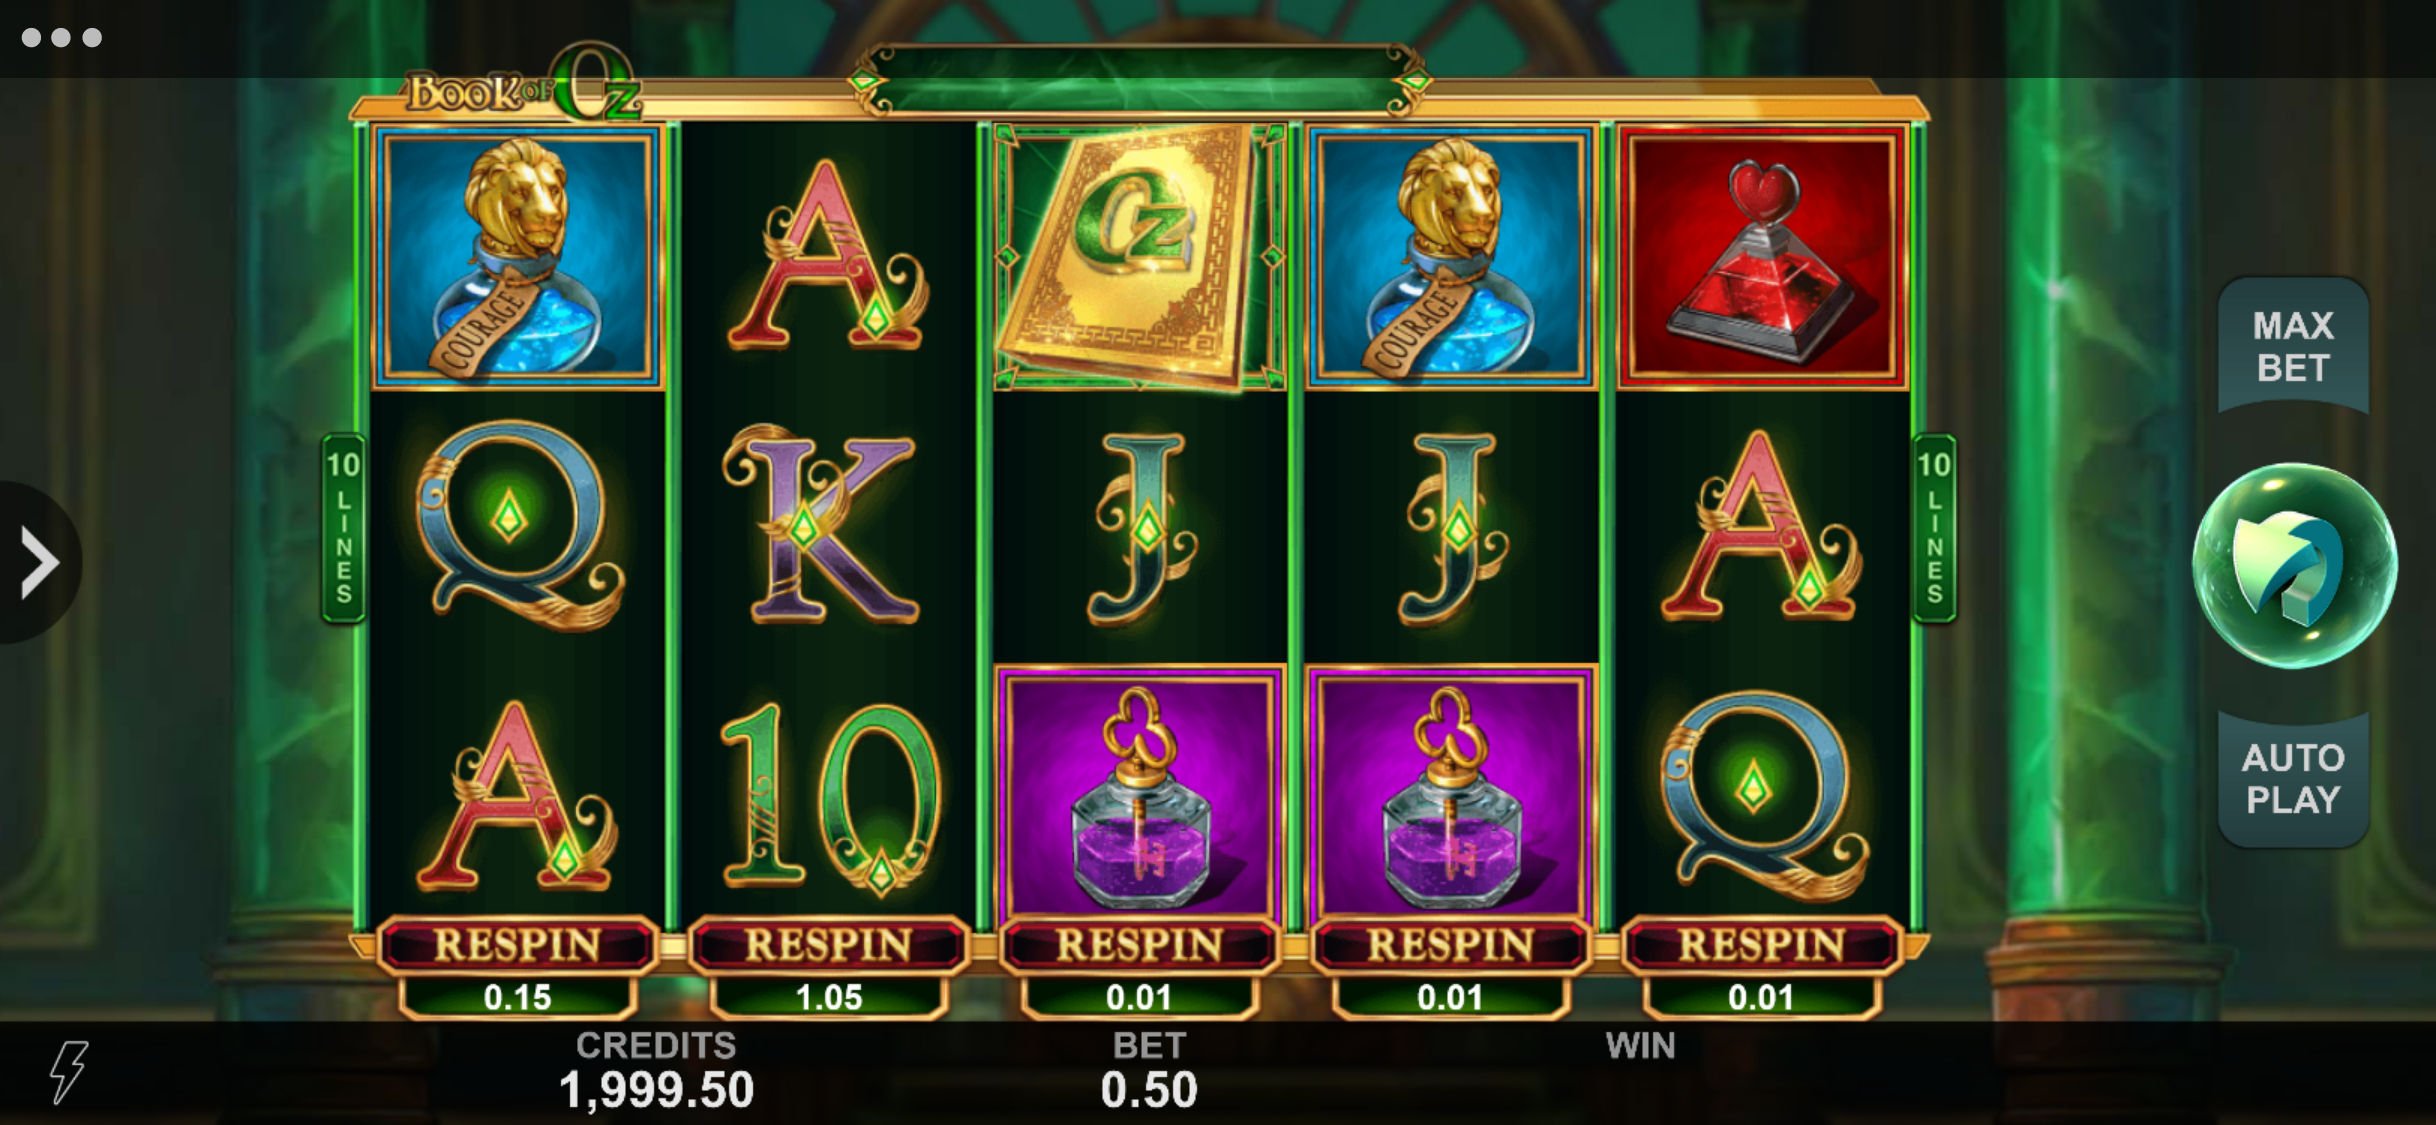 Casillion Casino Mobile Slot Games Review